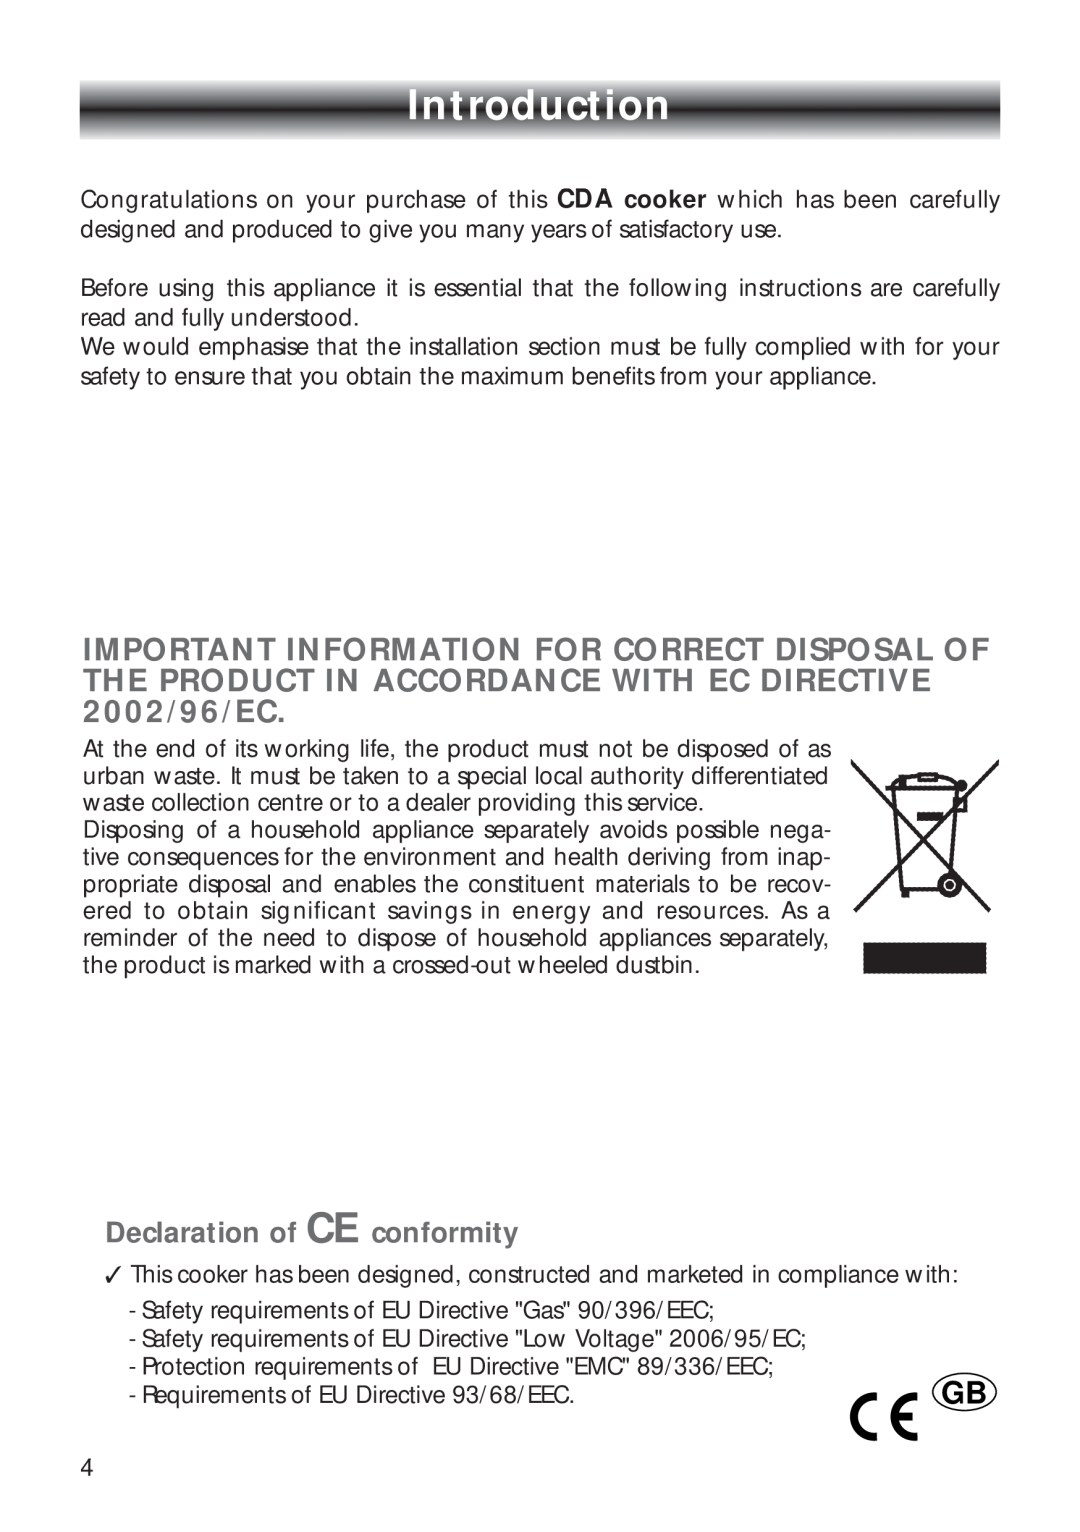 CDA RV 700 installation instructions Introduction, Declaration of CE conformity 